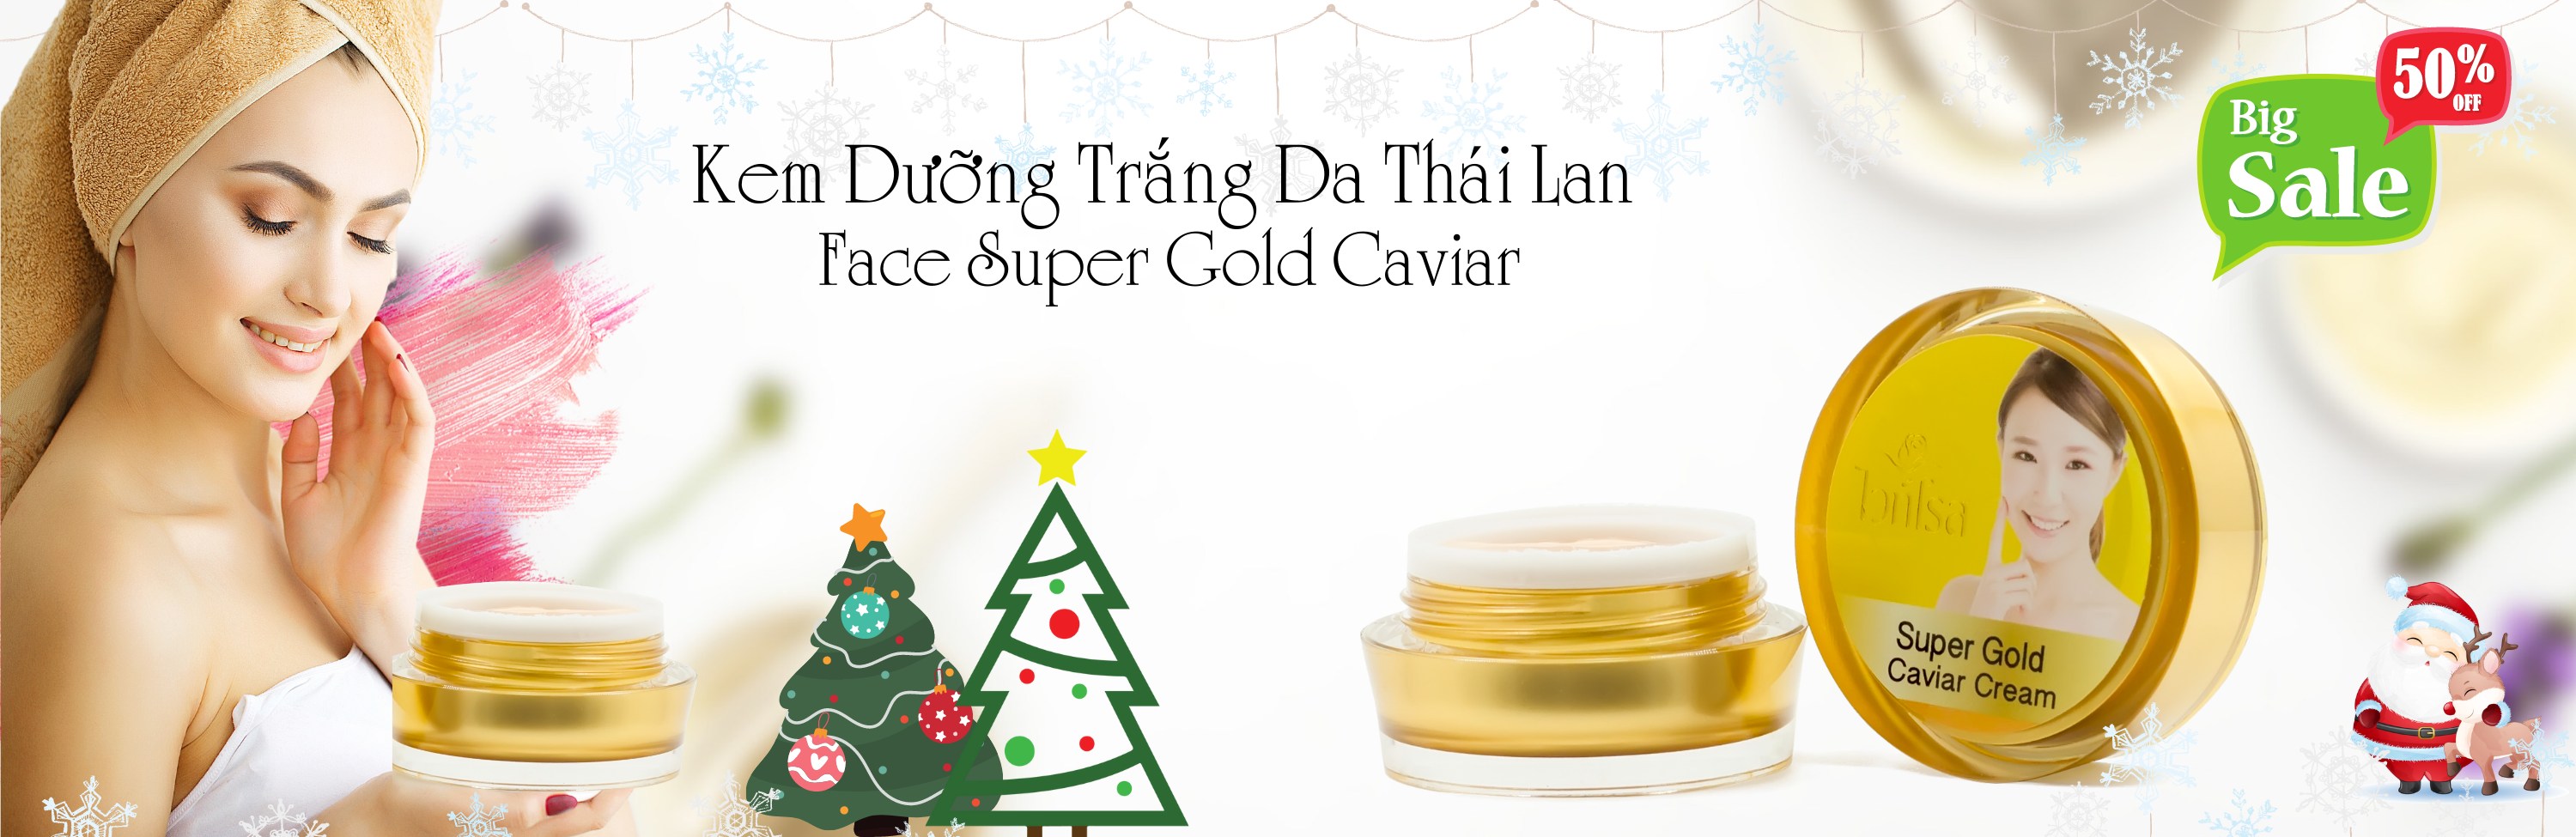 Kem Dưỡng Trắng Da Thái Lan Cao Cấp Face Super Gold Caviar